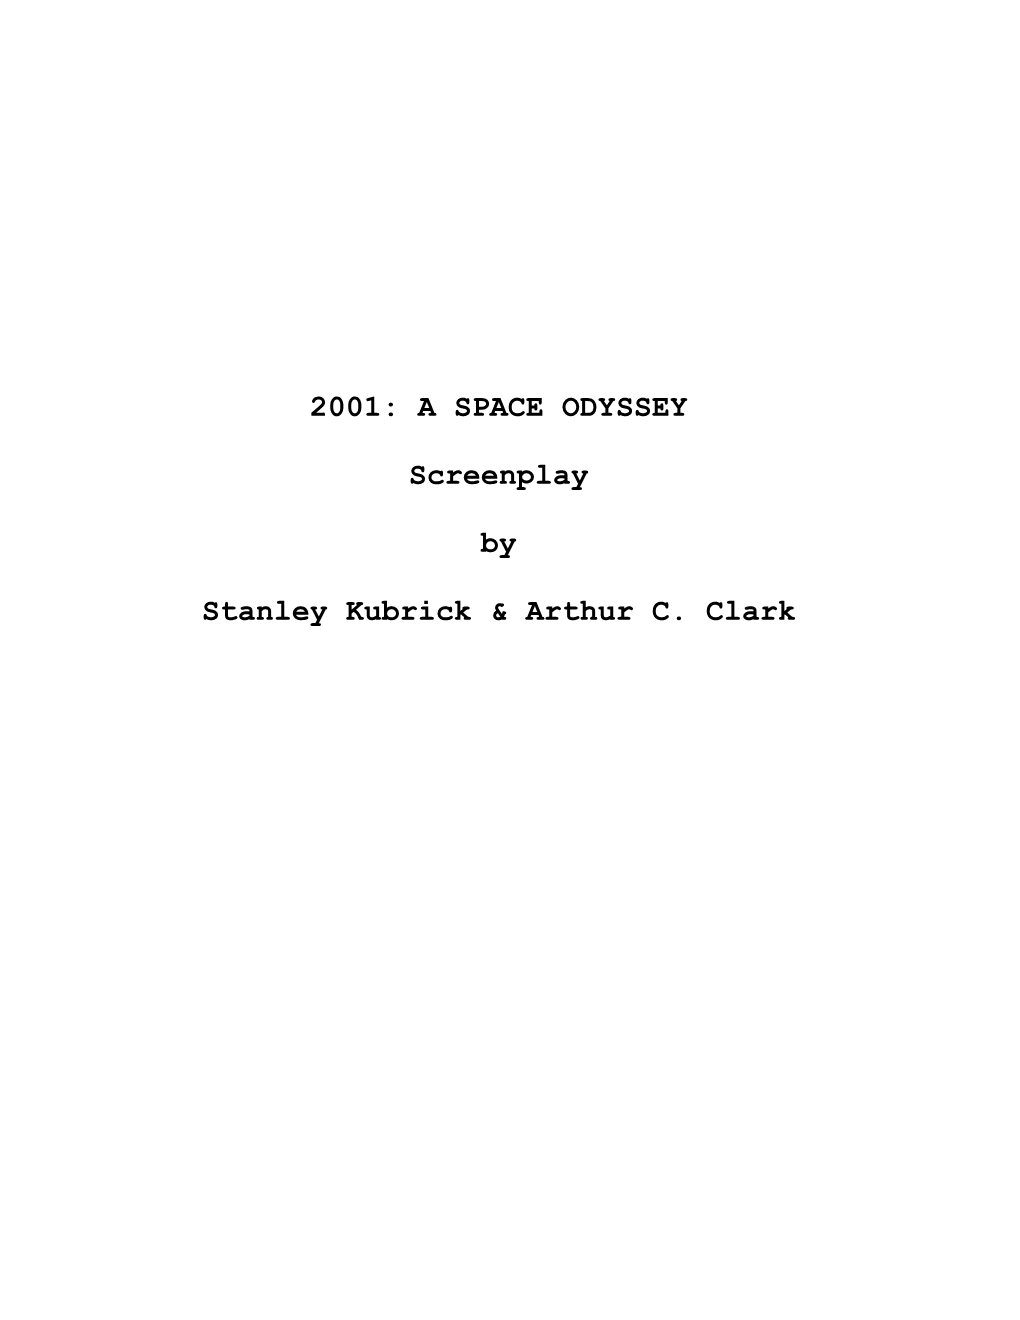 2001: a SPACE ODYSSEY Screenplay by Stanley Kubrick & Arthur C. Clark